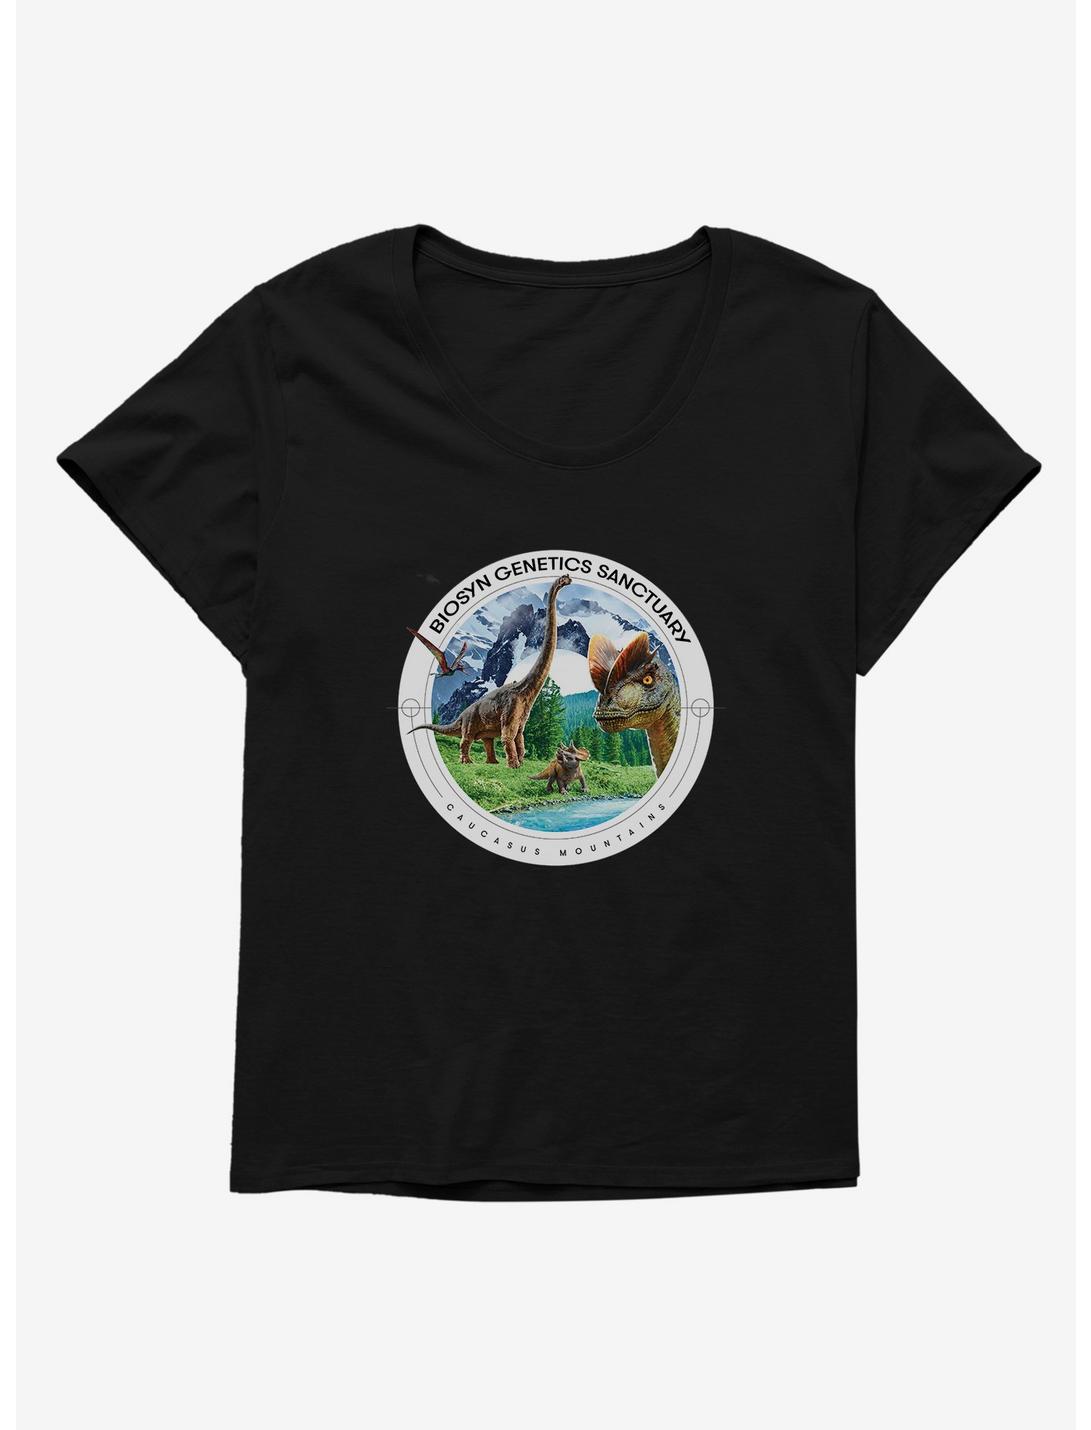 Jurassic World Dominion: BioSyn Caucasus Mountains Santuary Womens T-Shirt Plus Size, , hi-res